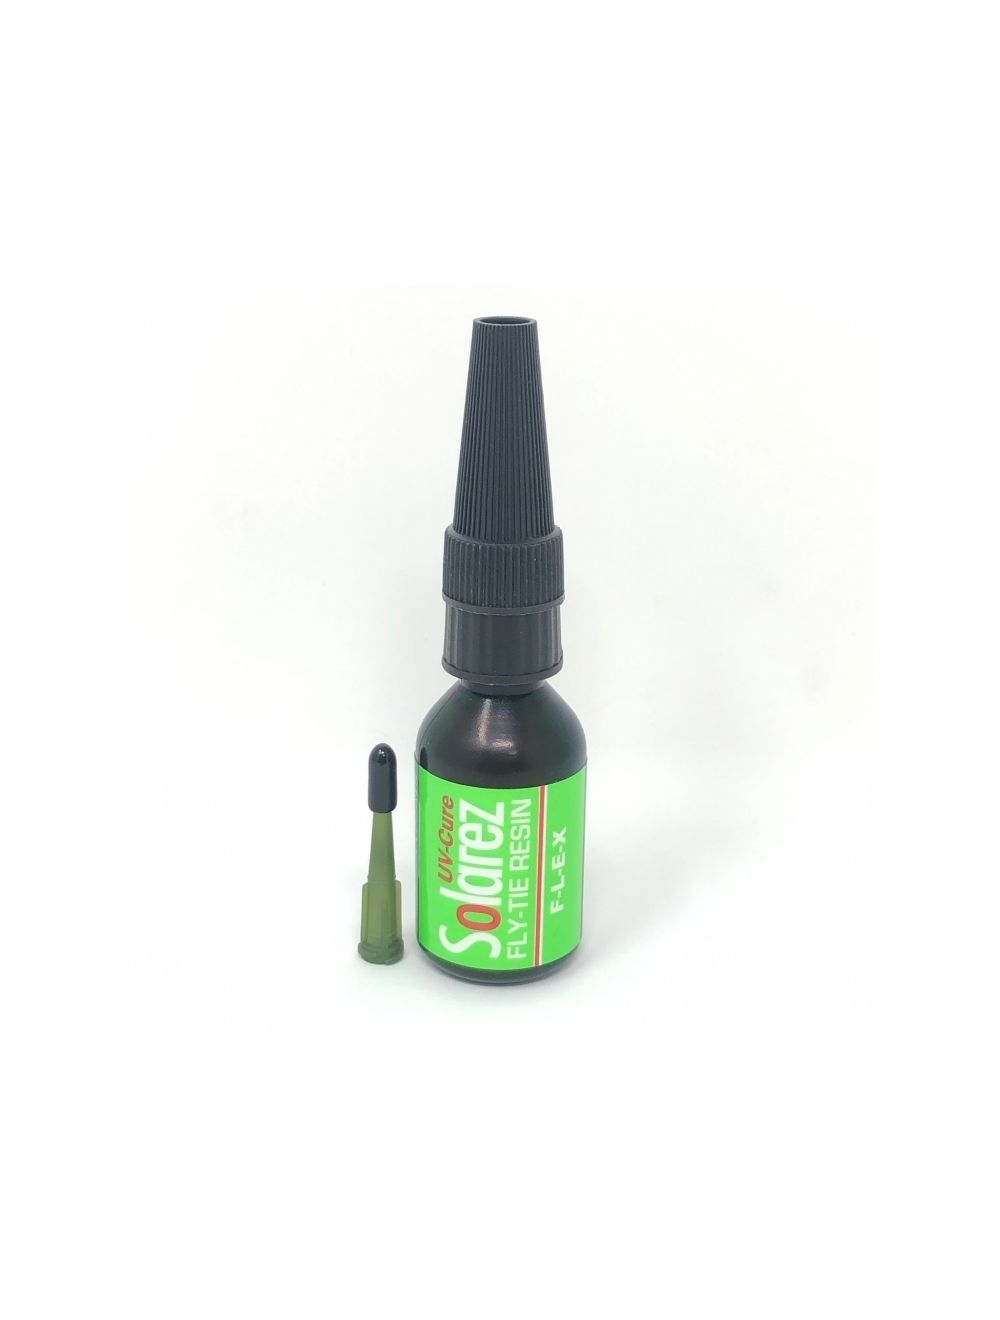 Solarez UV Cure Resin - 3 Pack TheFlyStop